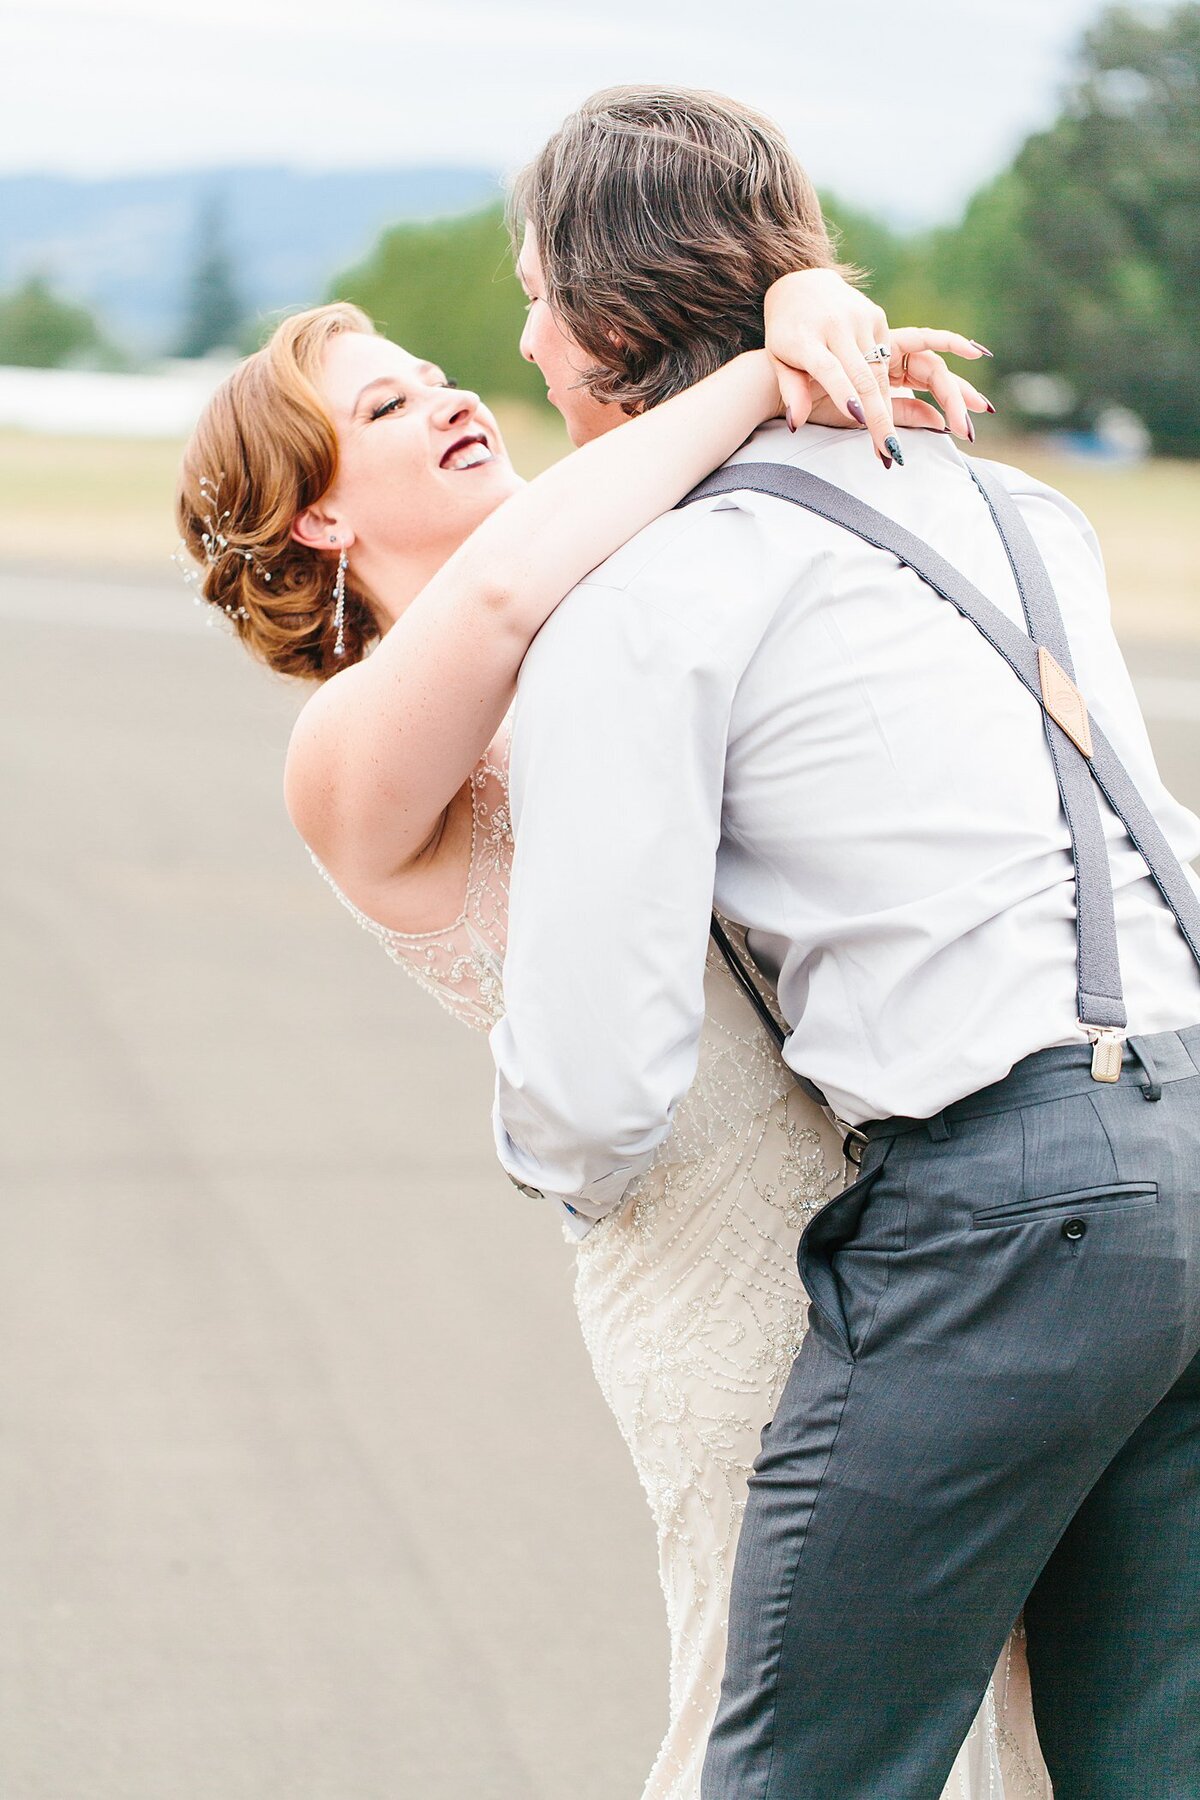 A Pilot's Wedding in an Airplane Hangar Portland OR-1031